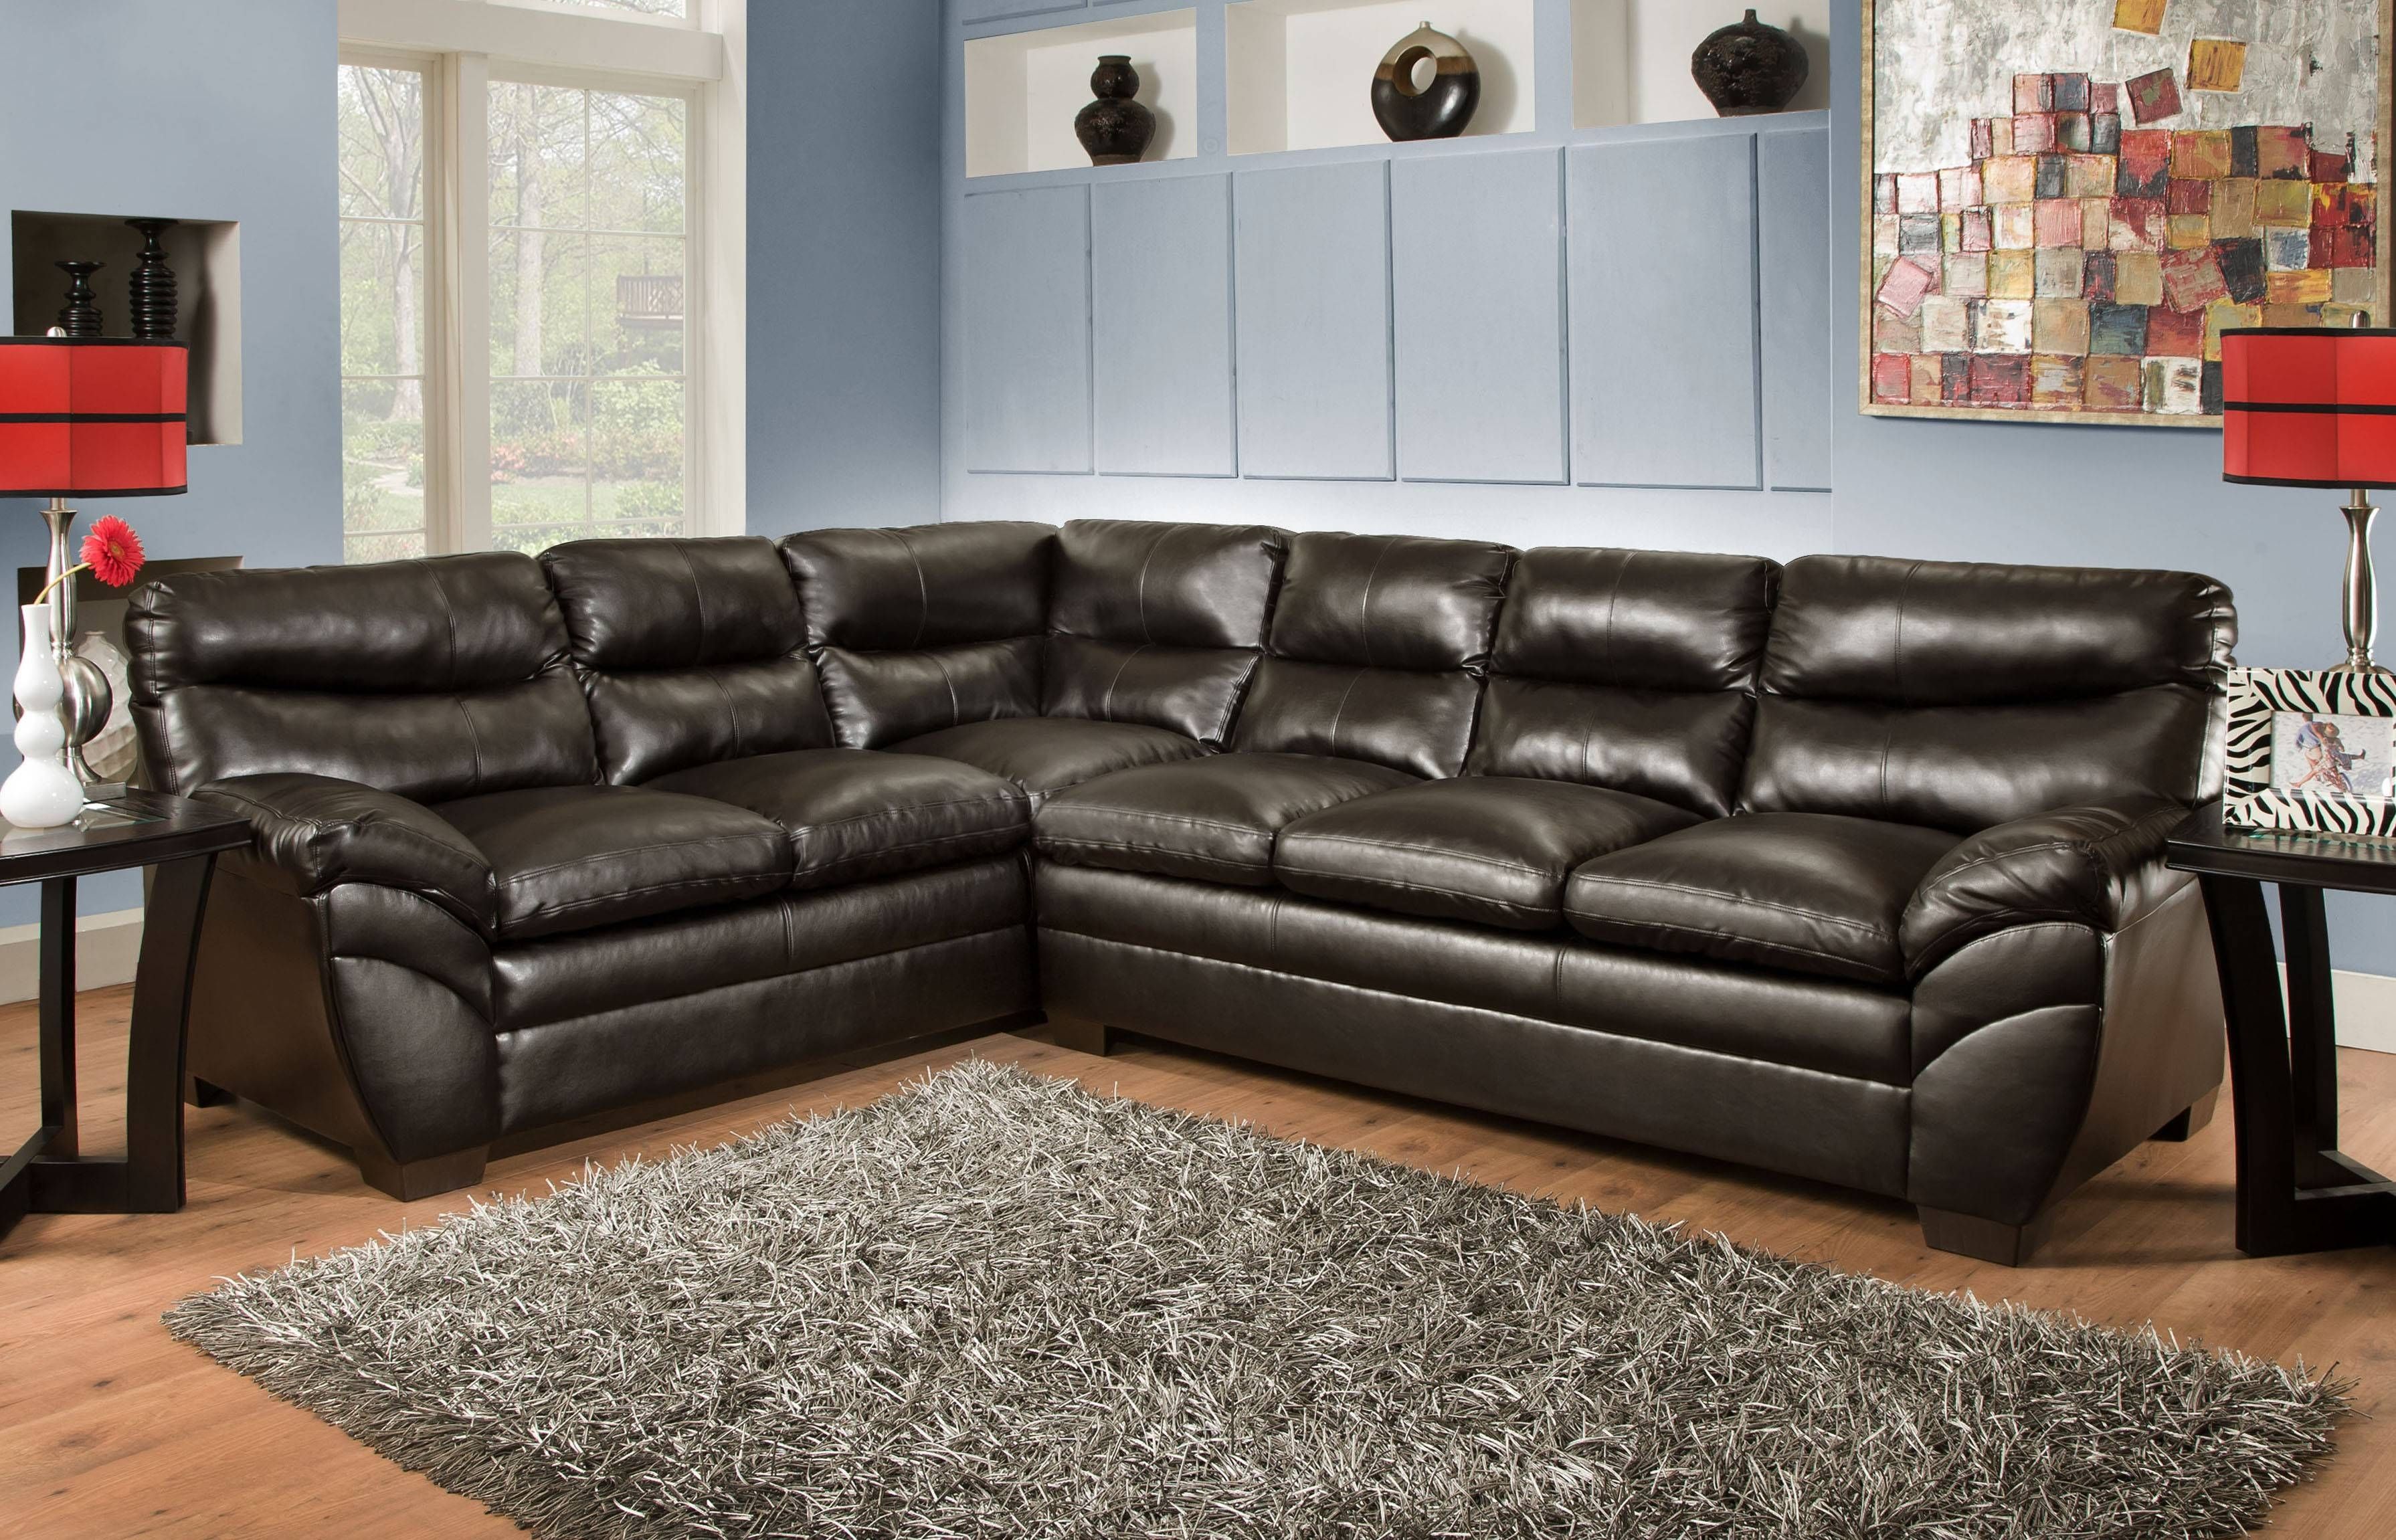 Sofa : Leather Sofas Orange County Home Design Wonderfull Within Sofa Orange County (View 5 of 25)